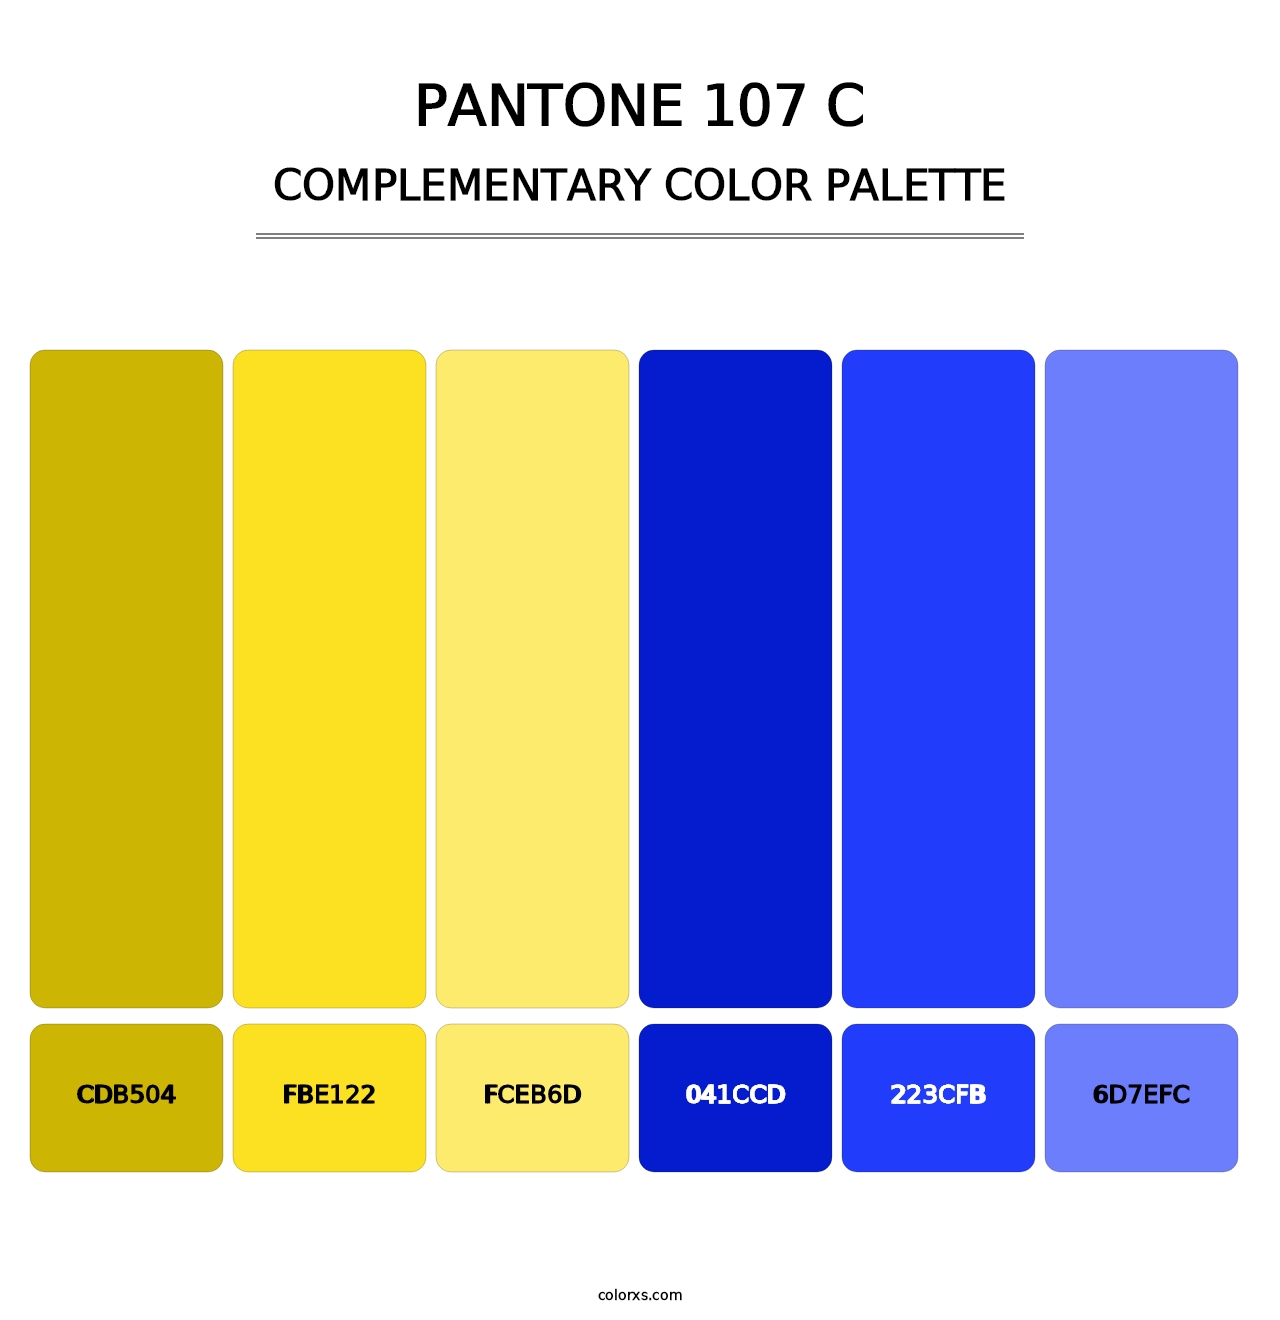 PANTONE 107 C - Complementary Color Palette